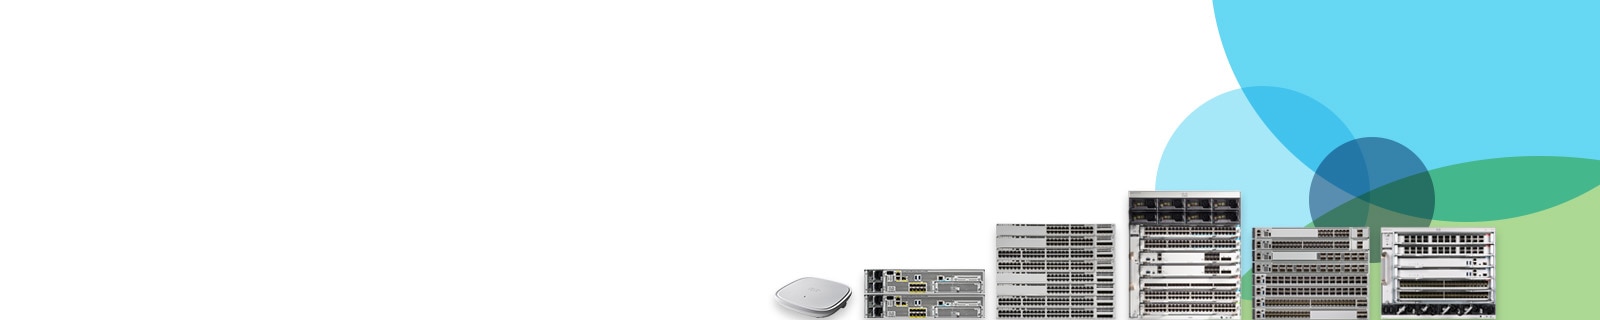 Família de switches Cisco Catalyst 9000 Wireless